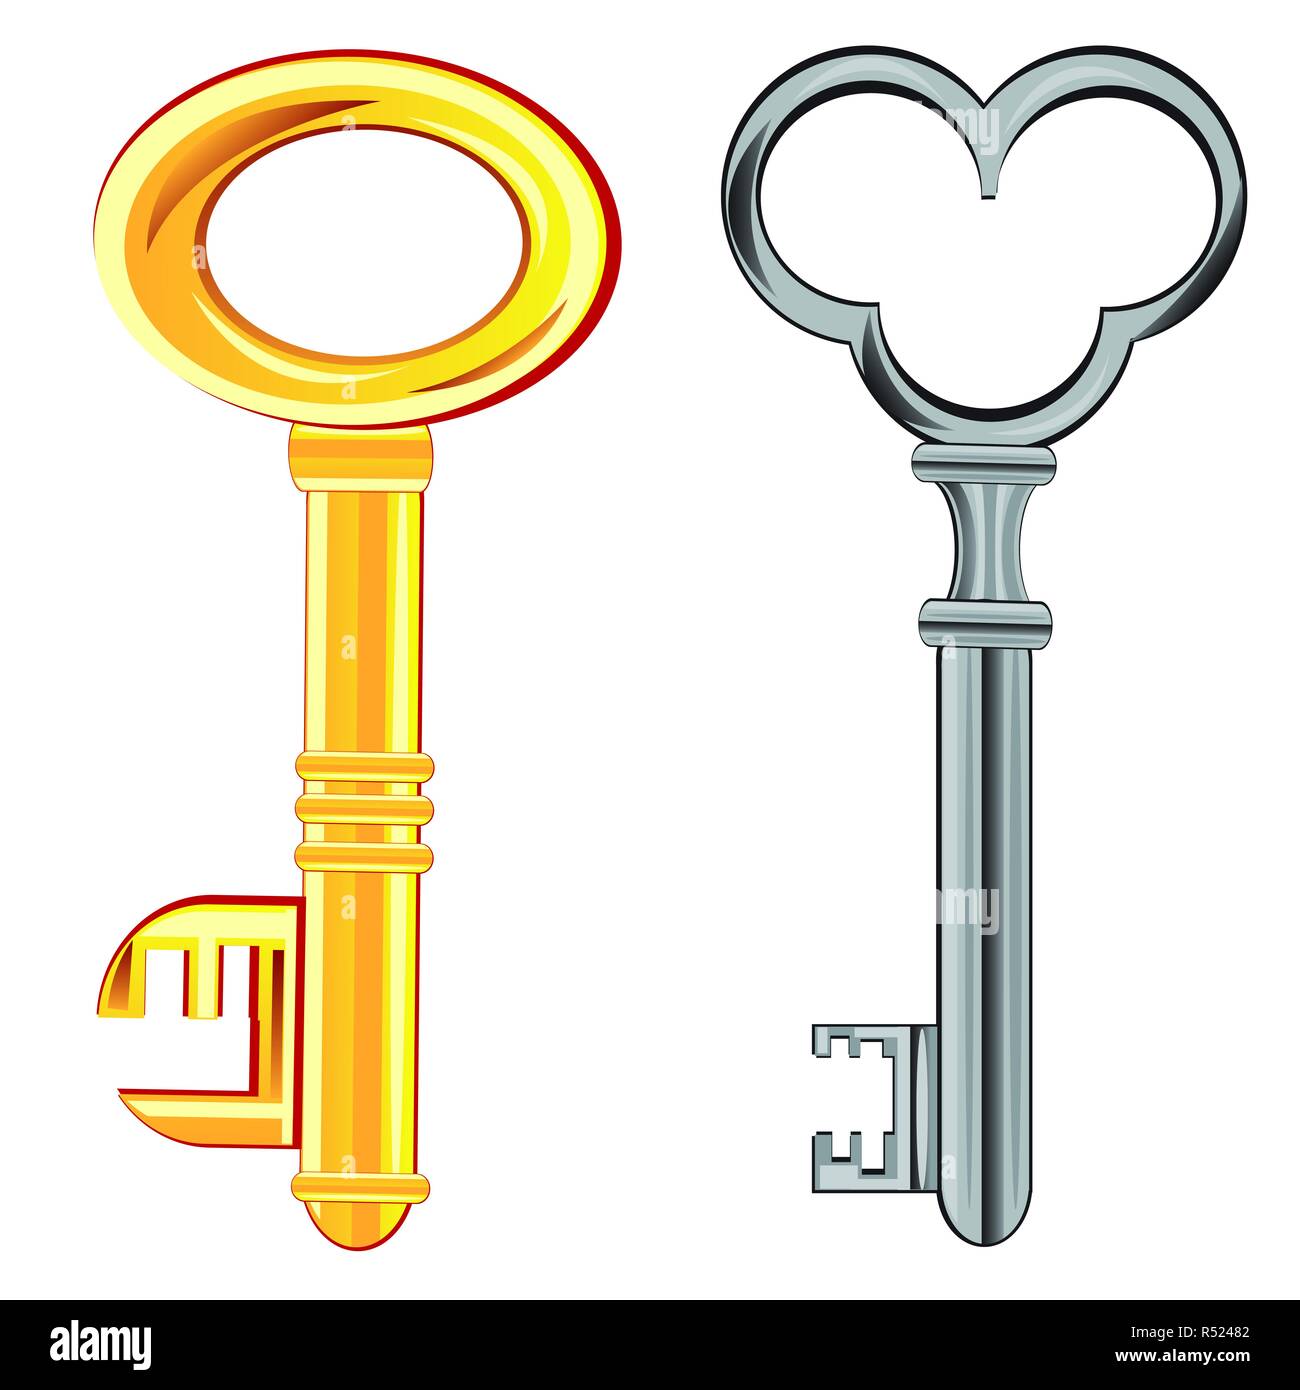 Key 2 house. Два ключа вектор. Два ключа картинка. Ключ клипарт вектор. Значок ключа с двумя кольцами.